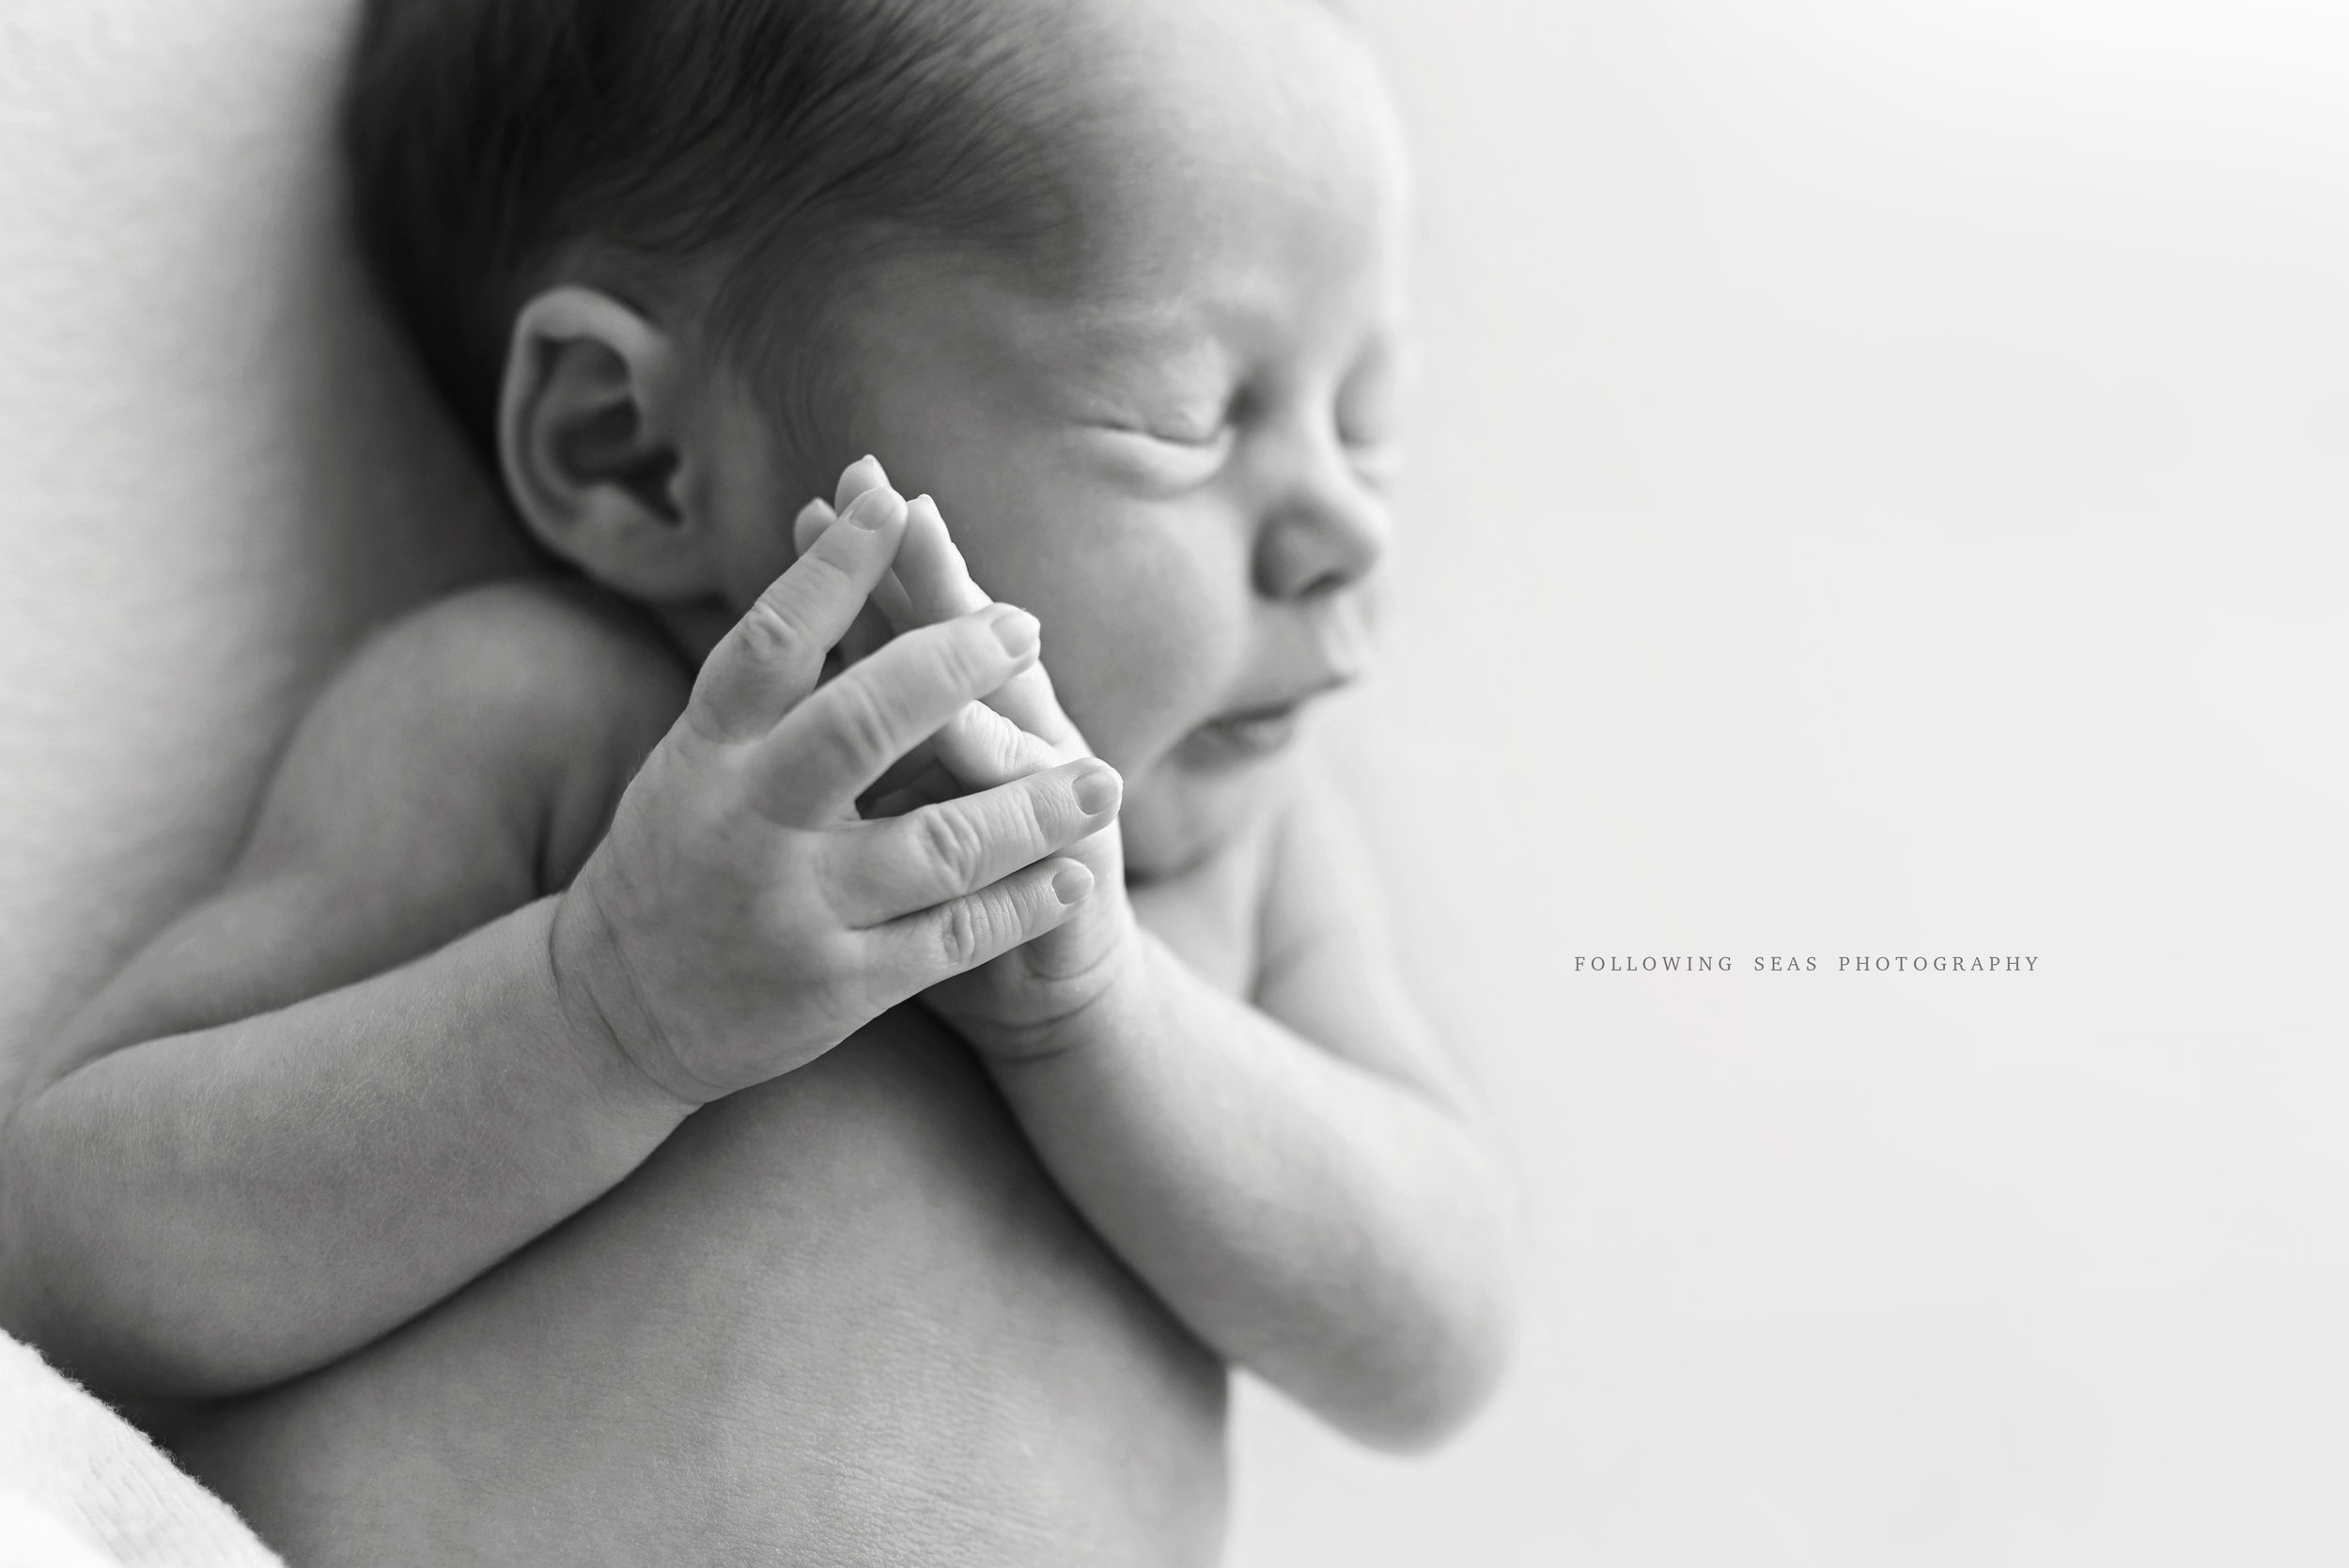 Charleston-Newborn-Photographer-Following-Seas-Photography-FSP_6998BW.jpg